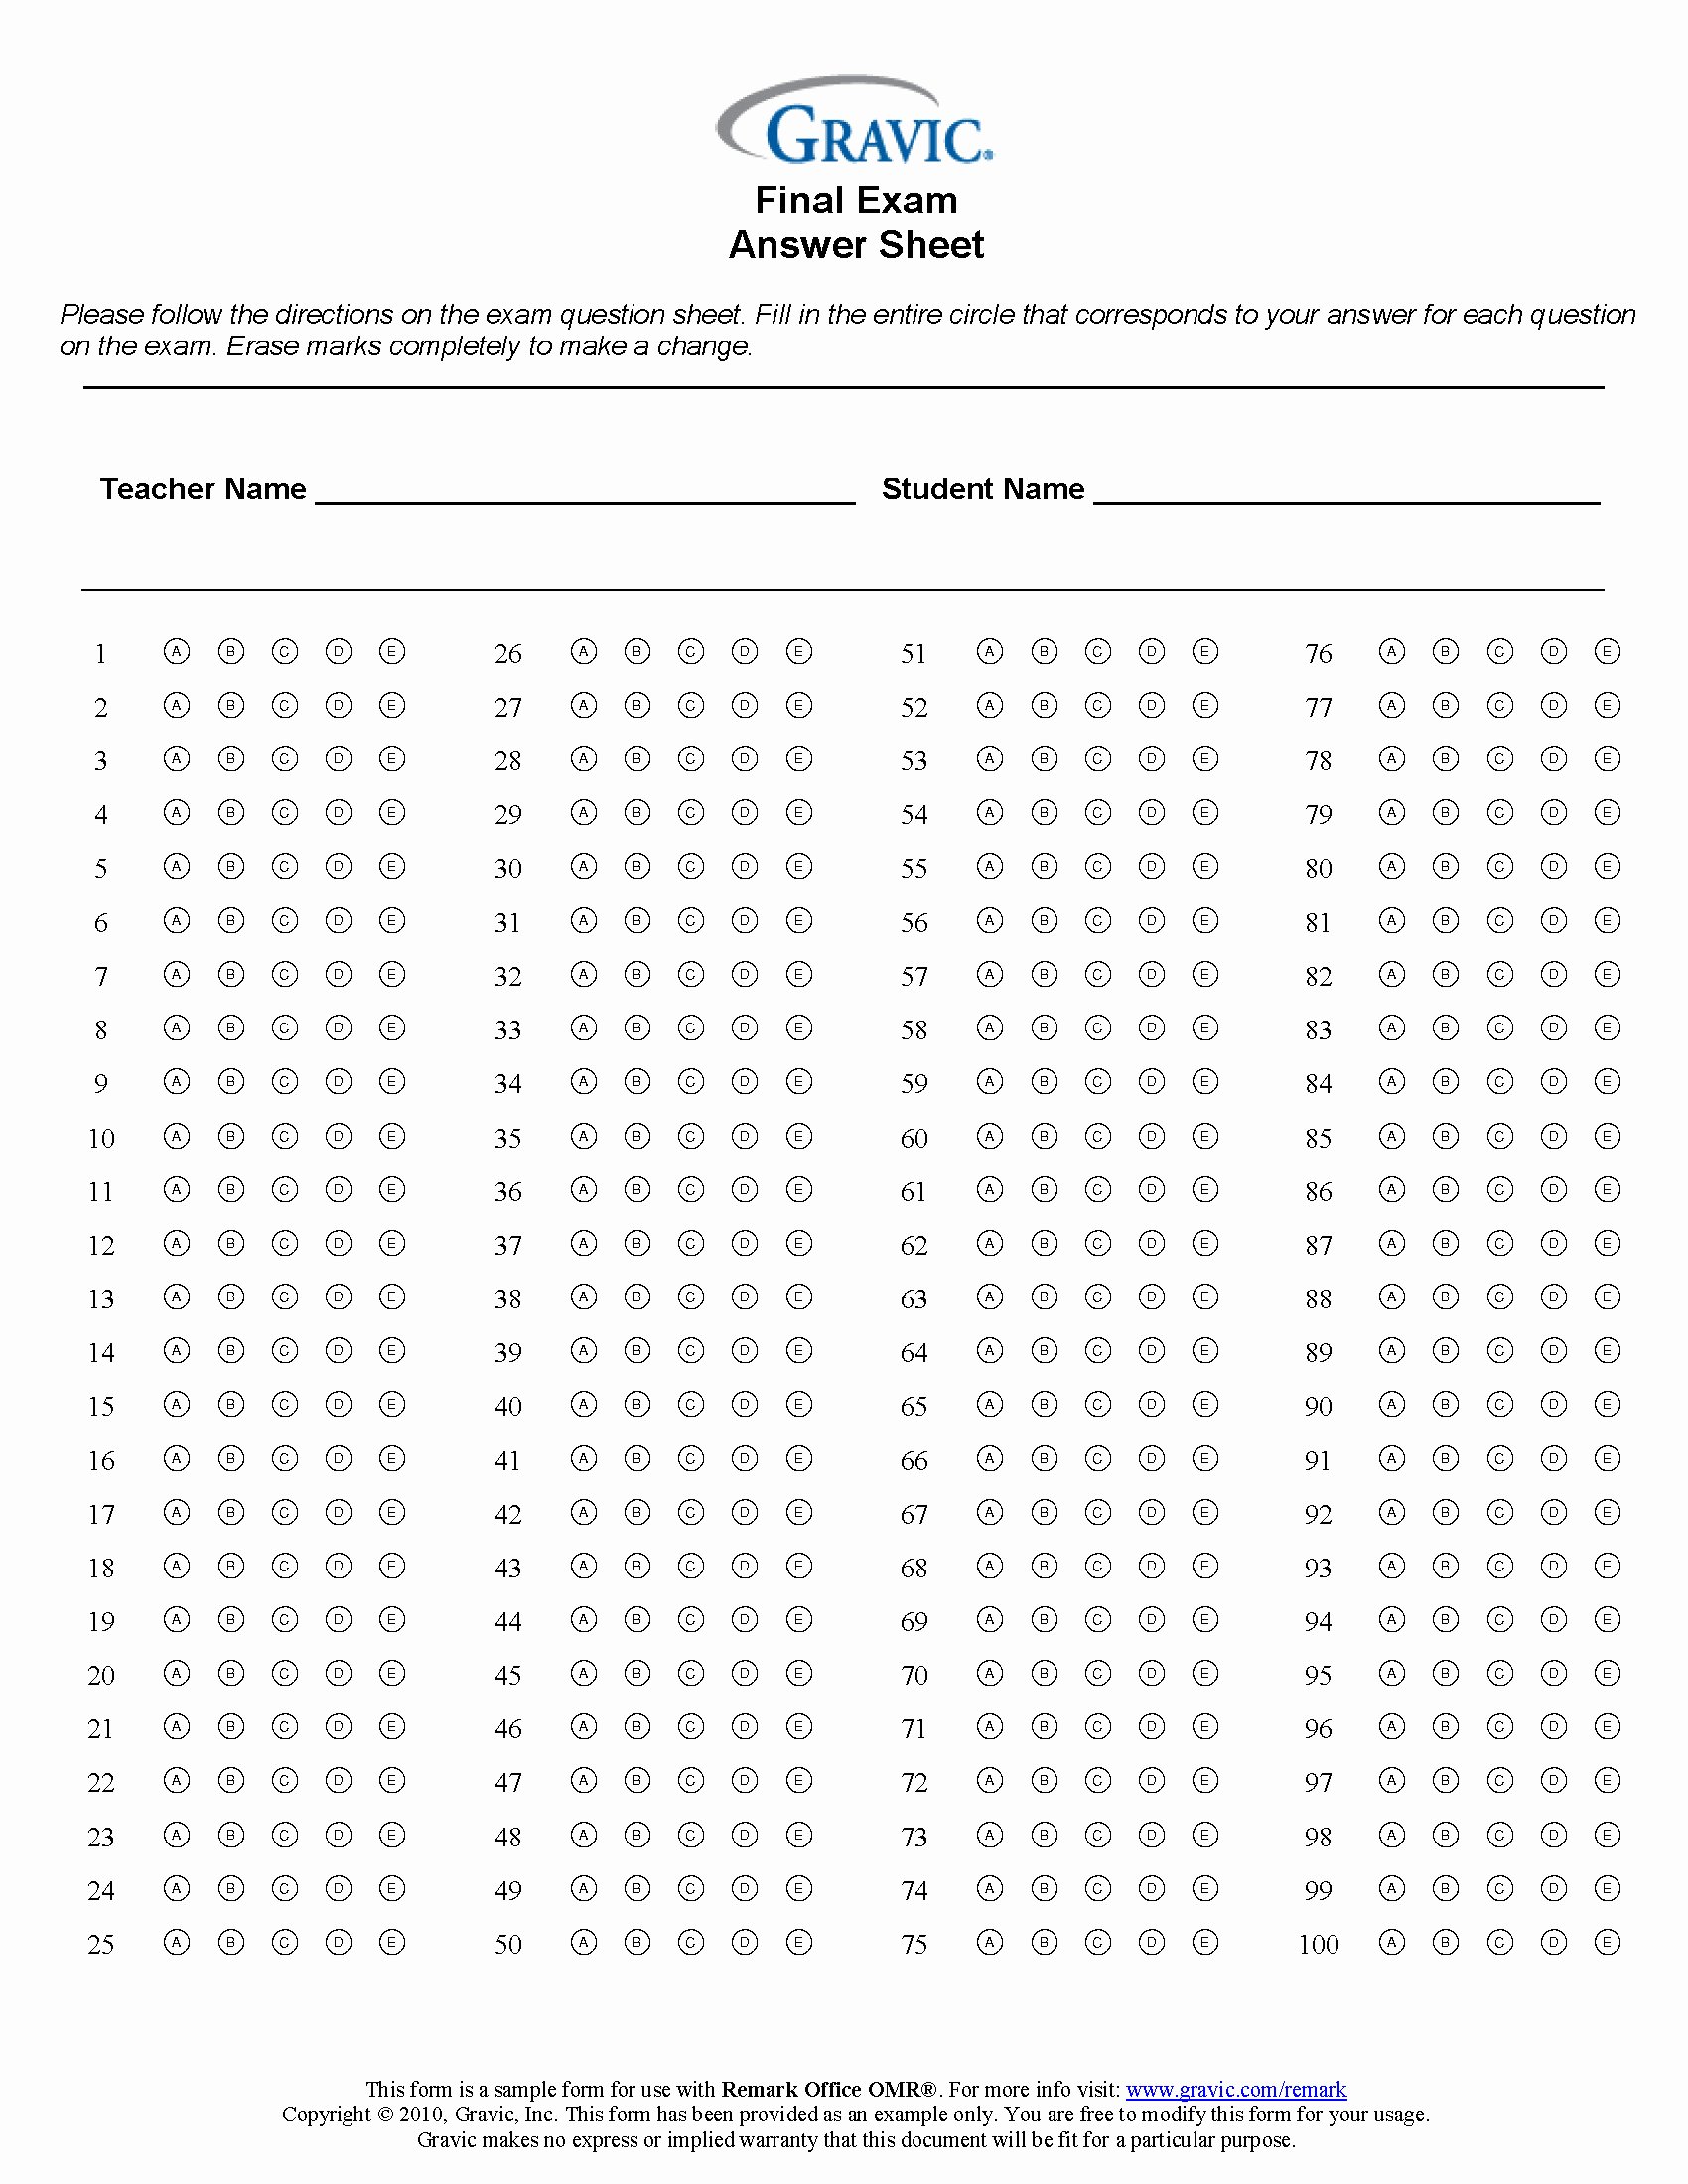 Answer Sheet Template 1-100 Luxury Final Exam 100 Question Test Answer Sheet · Remark software